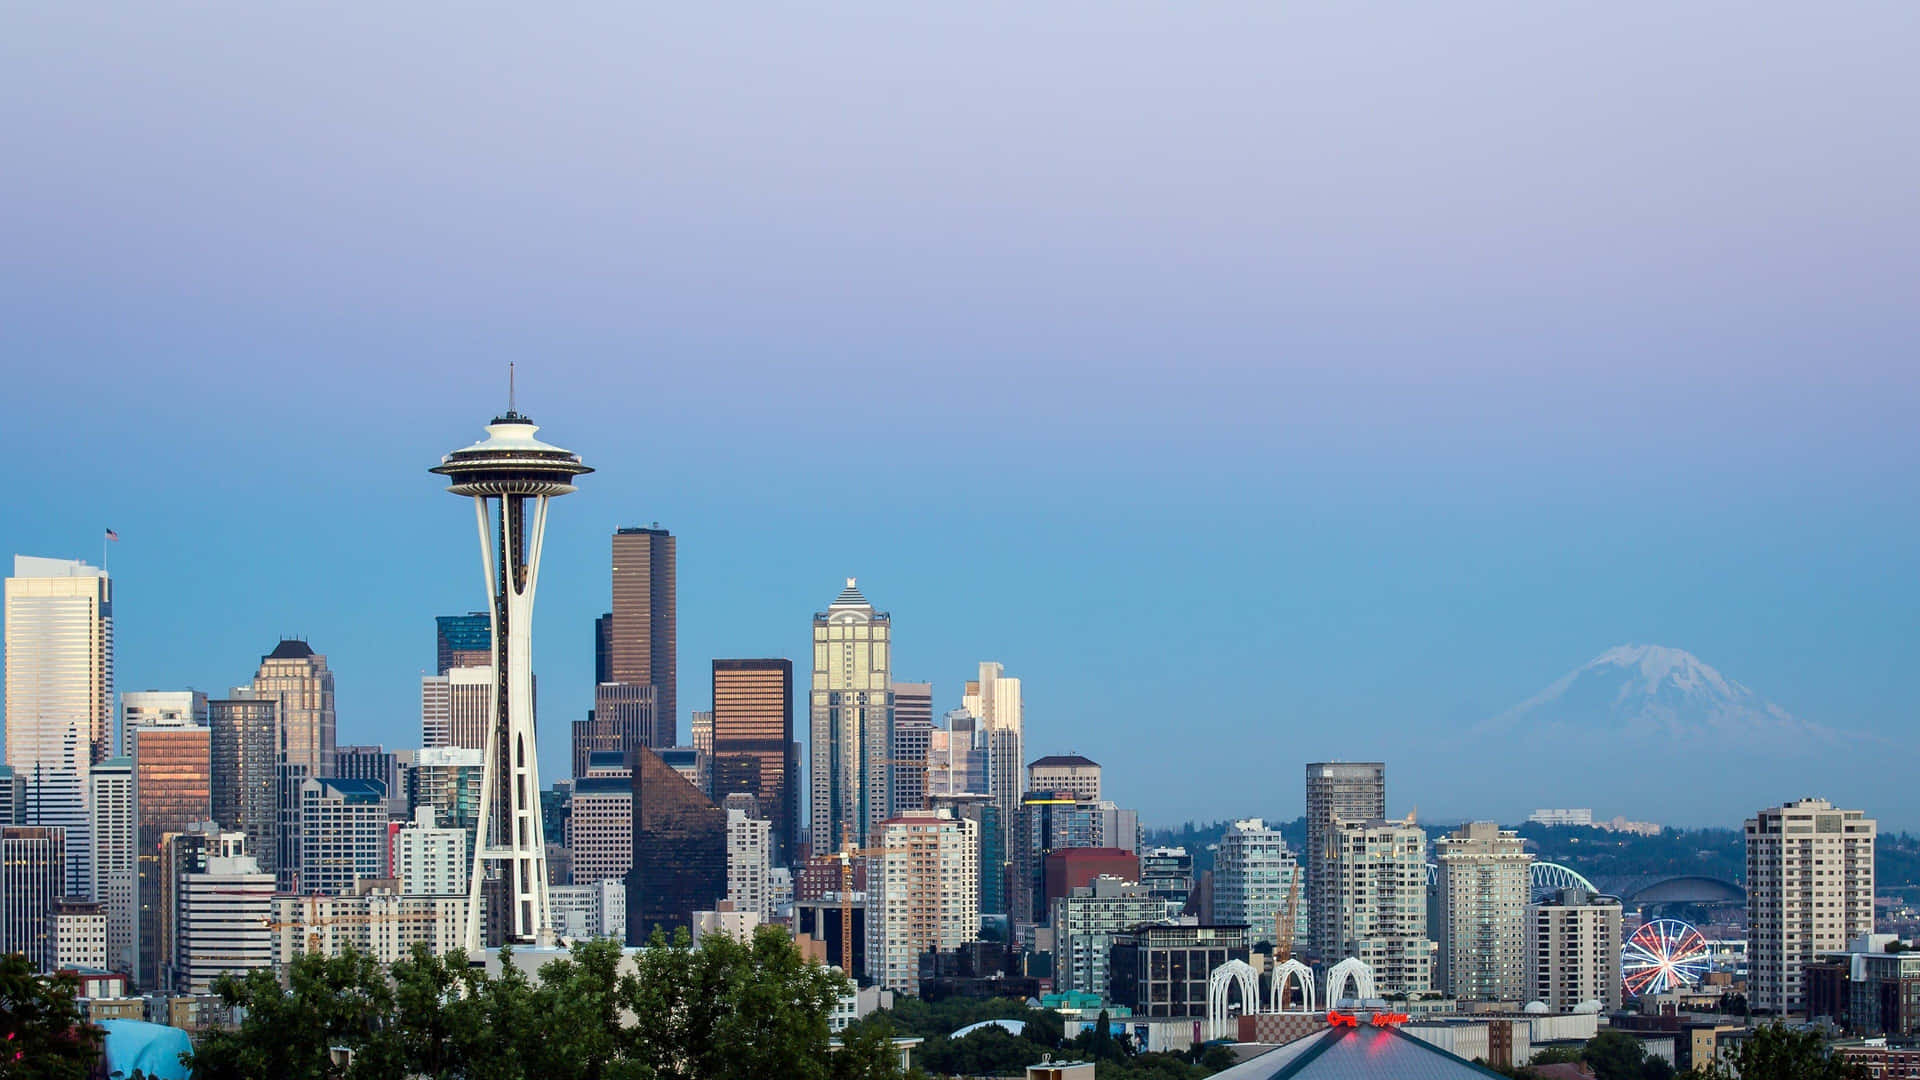 Nyd det fantastiske Seattle skyline. Wallpaper